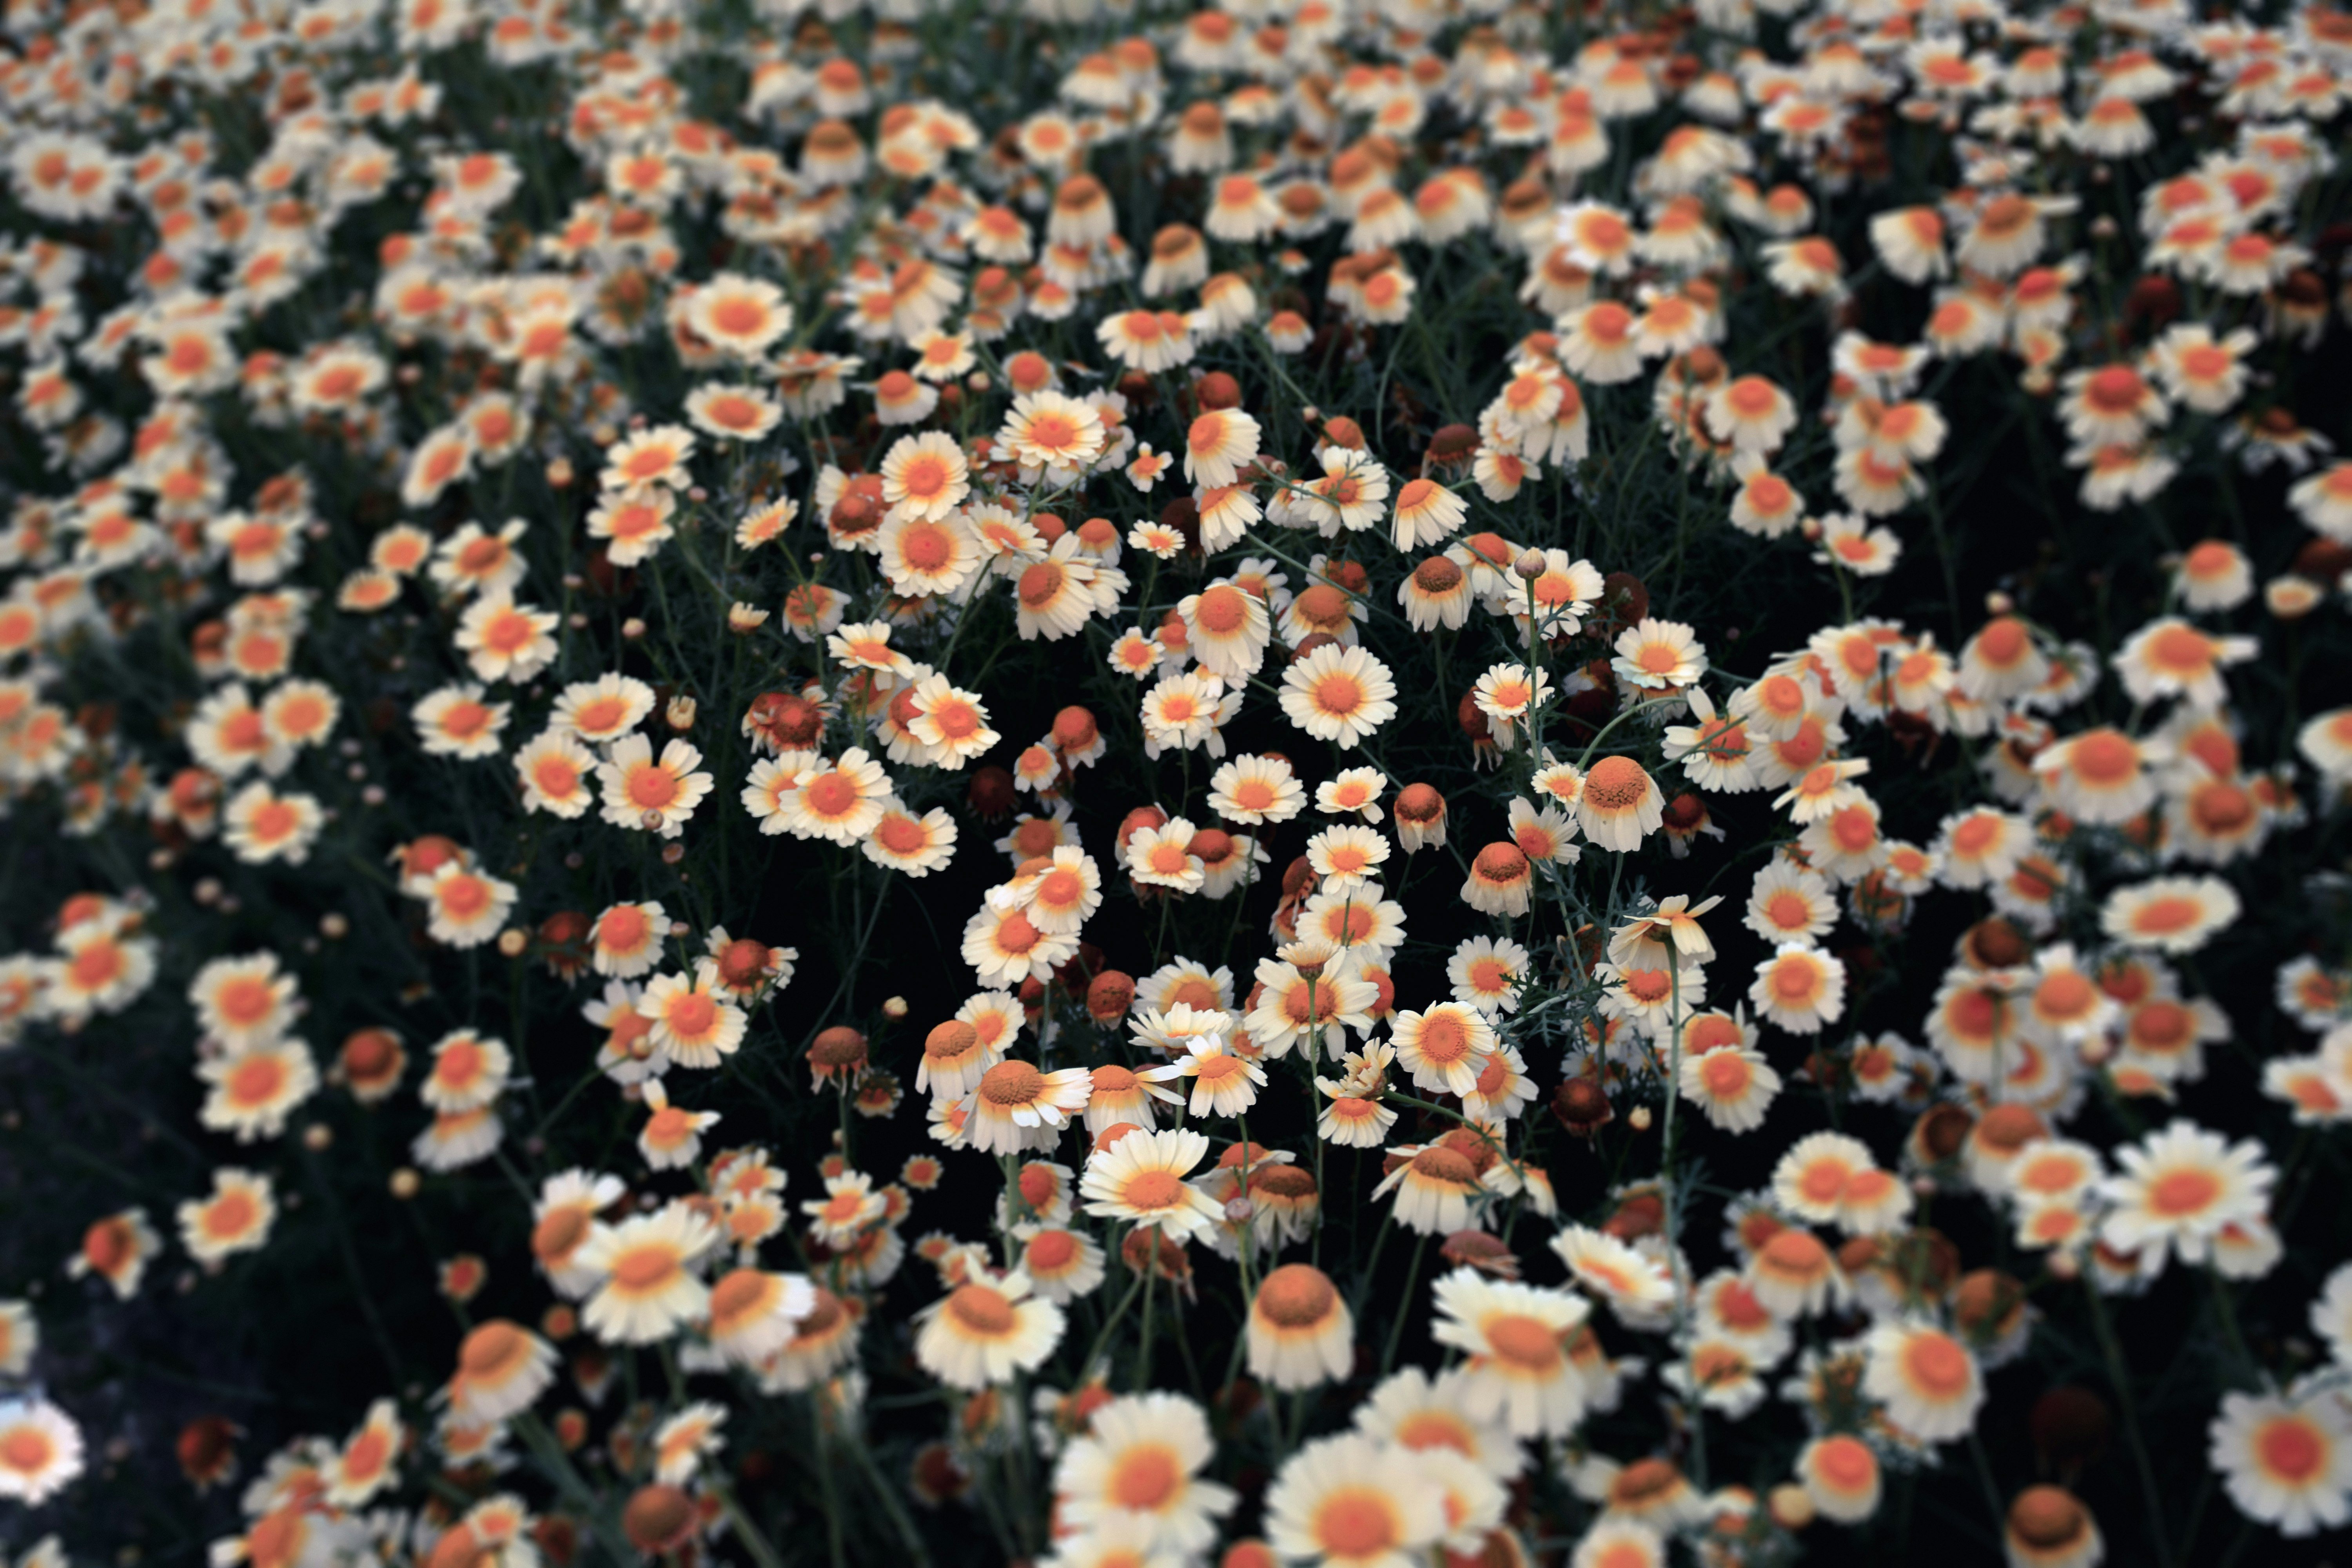 orange and white flower field during daytime